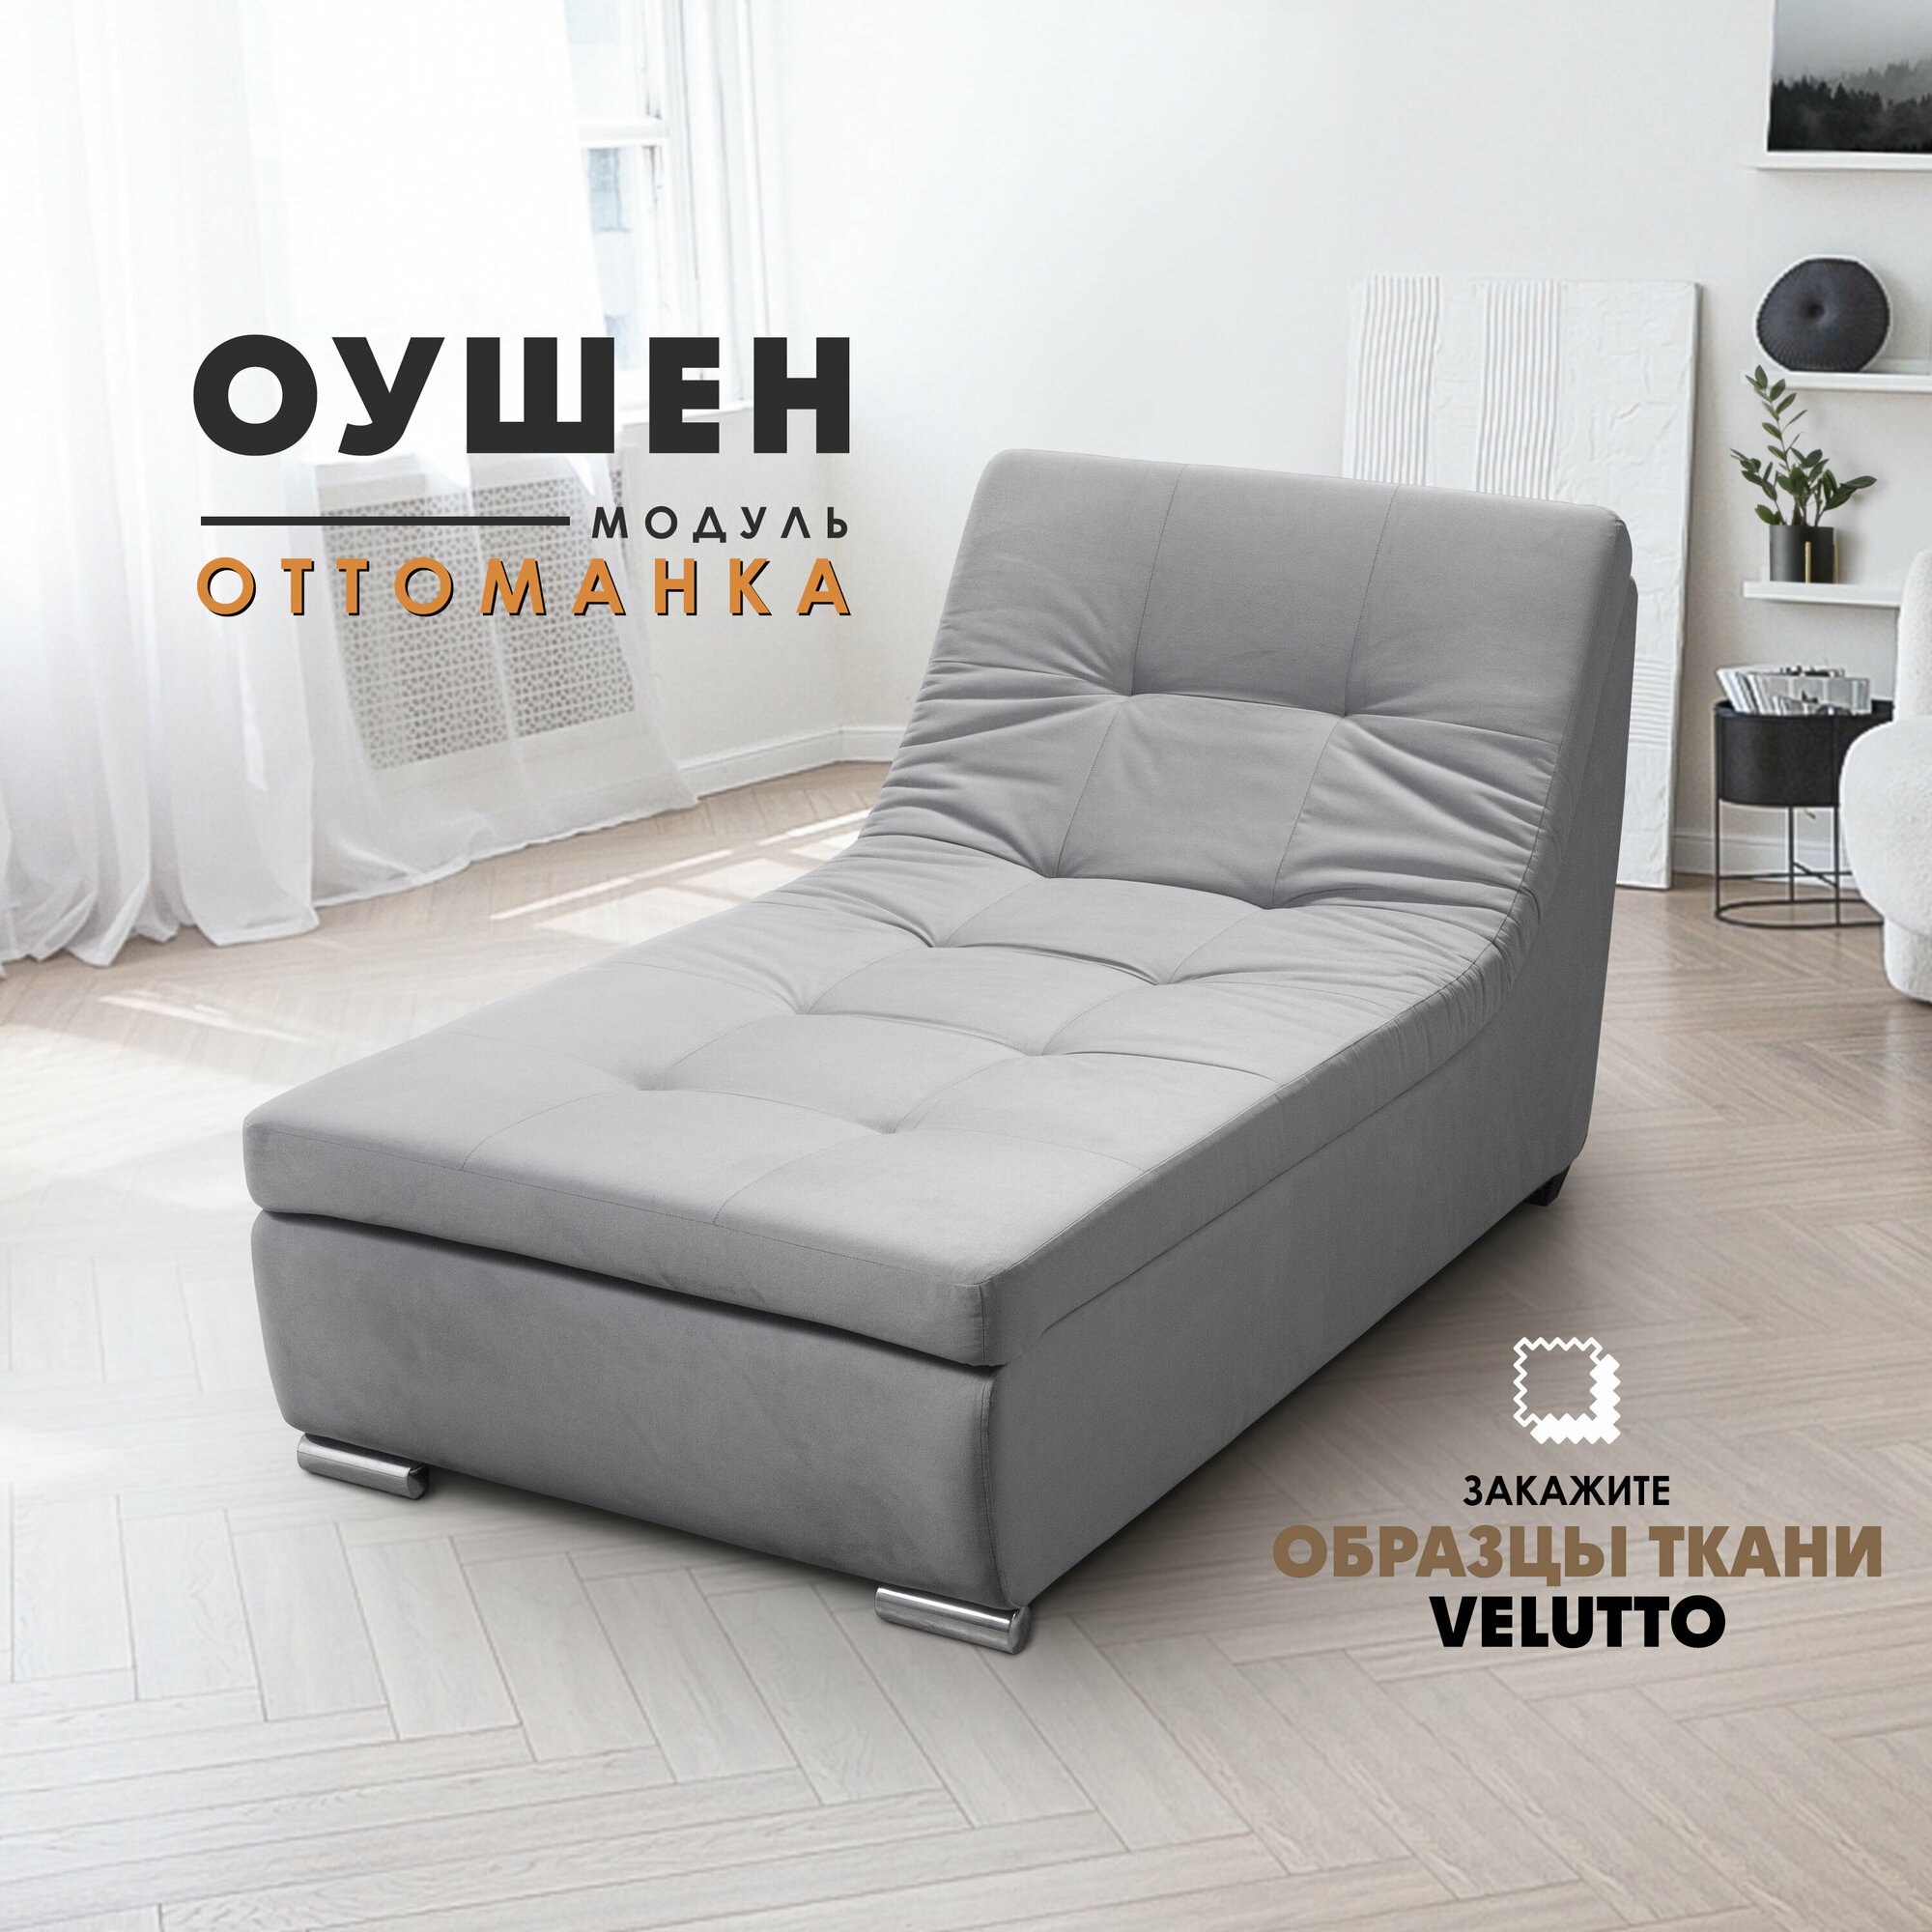 Оттоманка "Оушен" (секция модульного дивана), Velutto 12